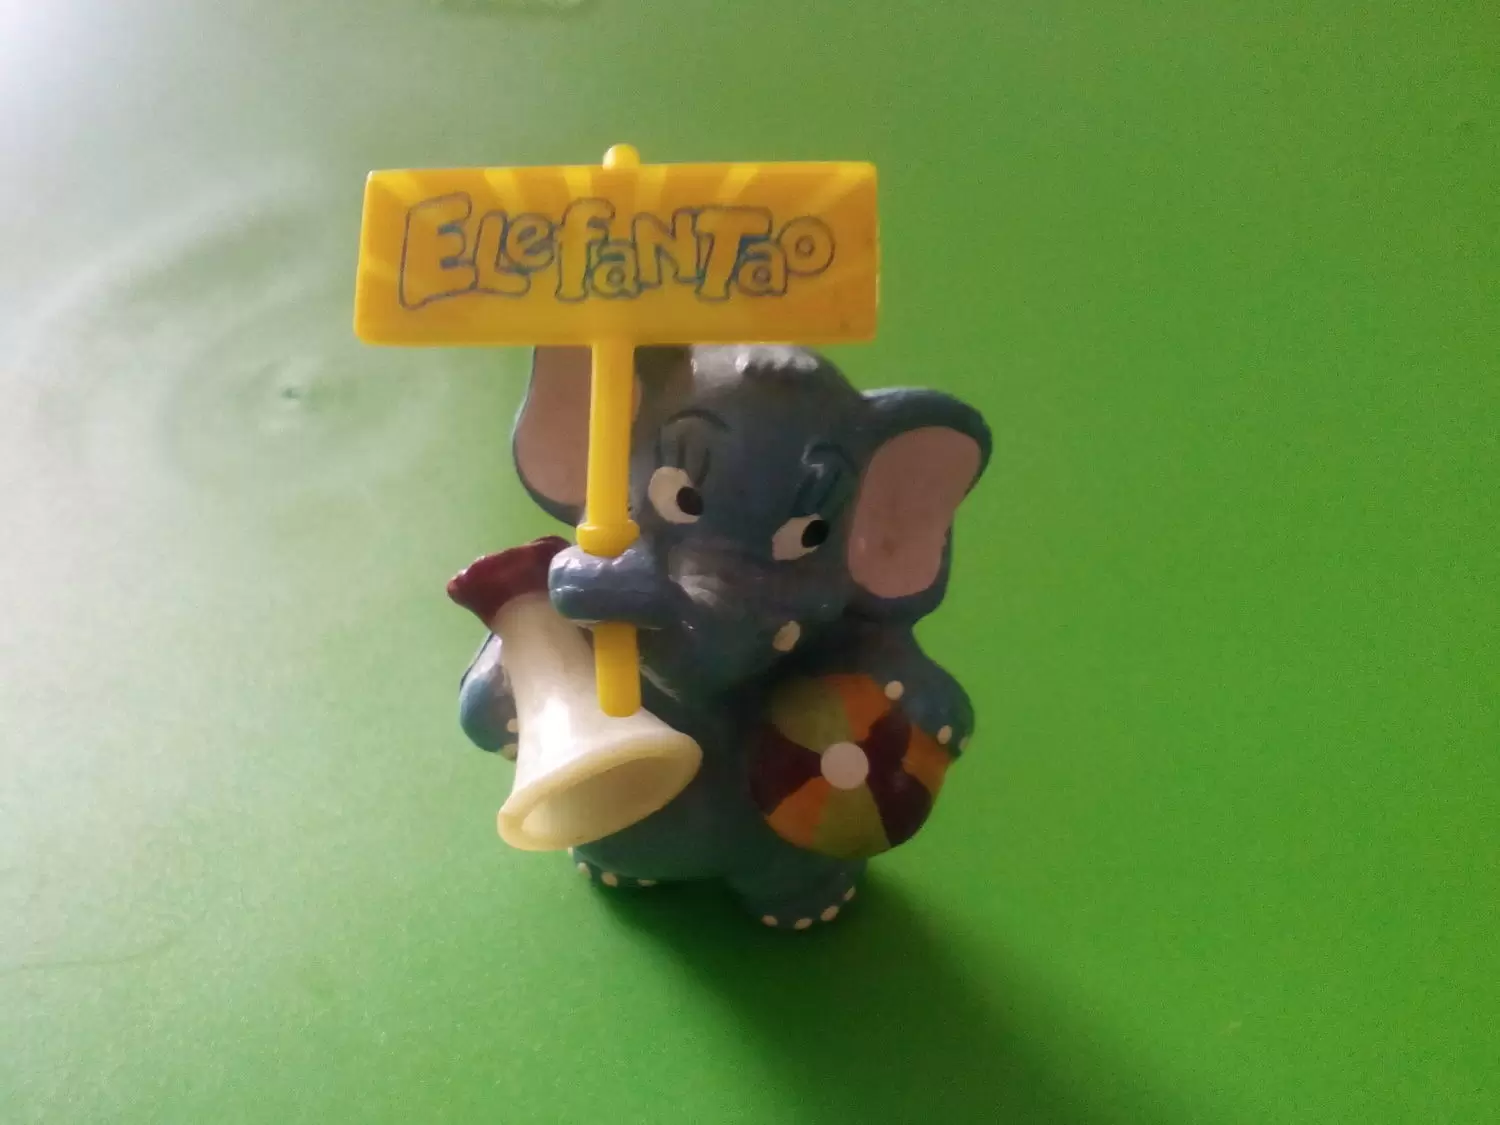 Les Eléphantos au club - Jean Timono - Pancarte \